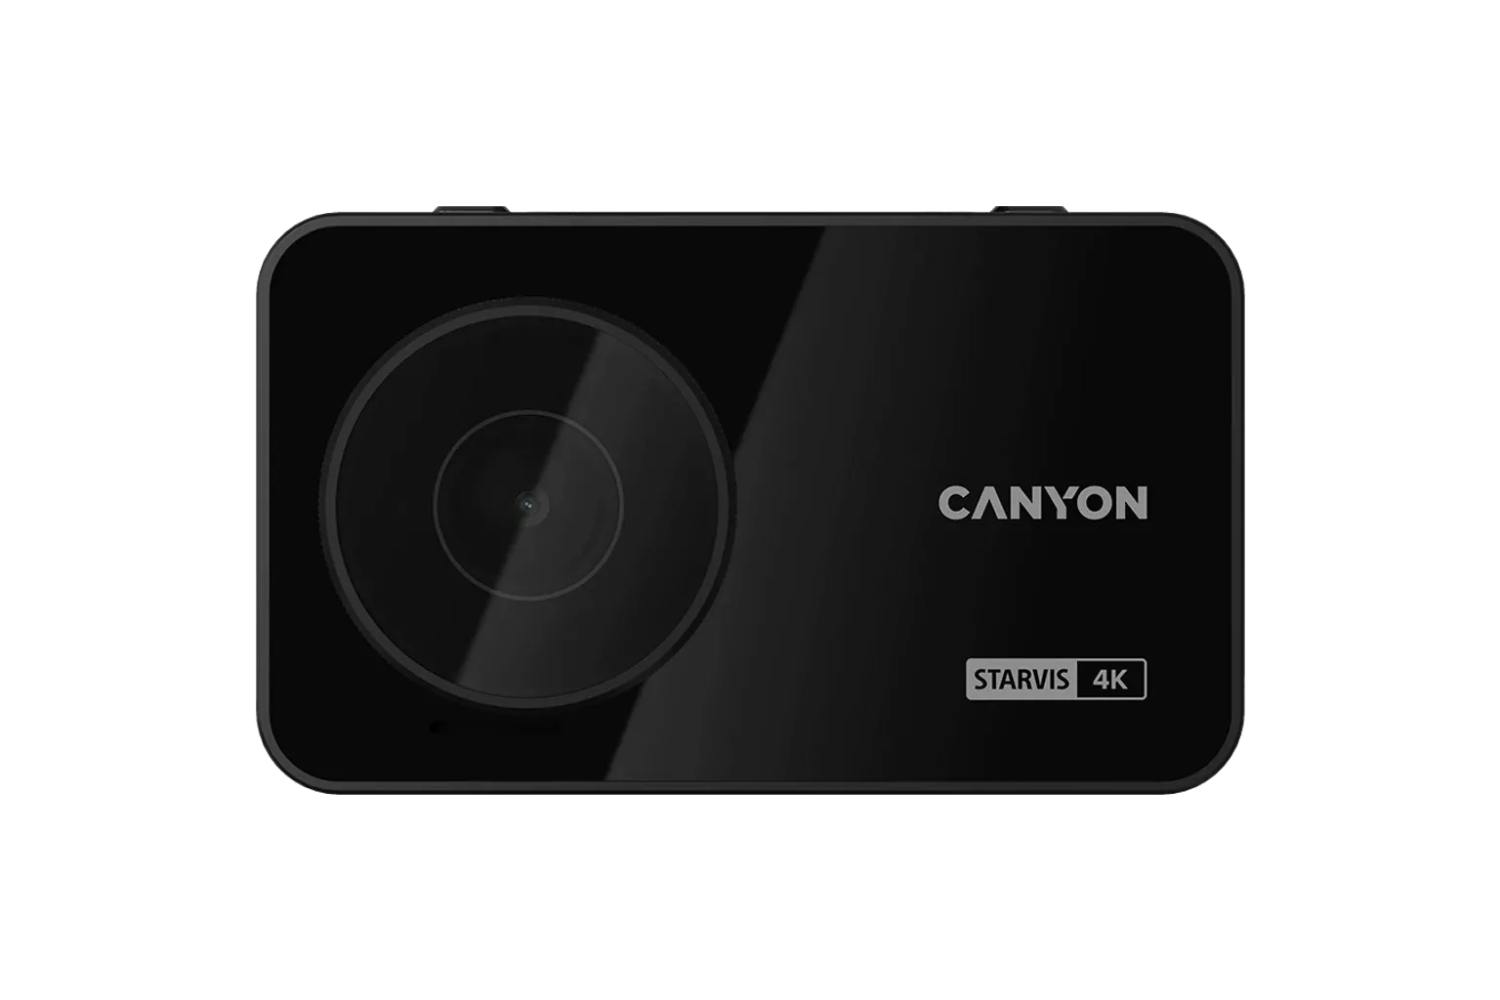 Canyon CND-DVR40GPS Car Video Recorder Dash Cam | Black